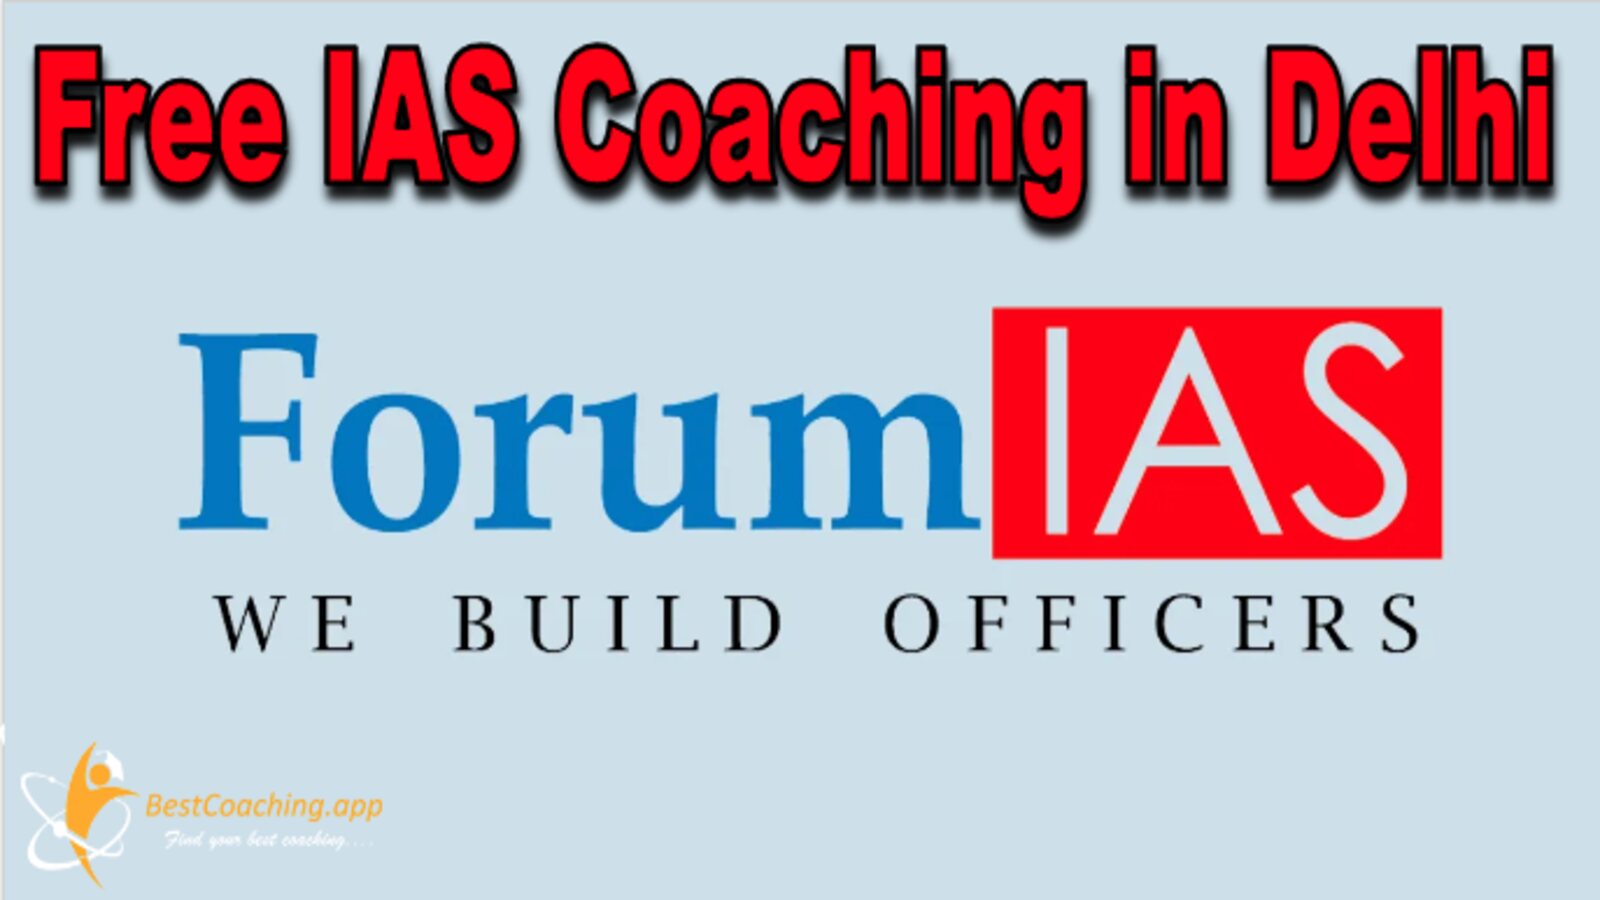 Forum IAS free IAS Coaching in Delhi